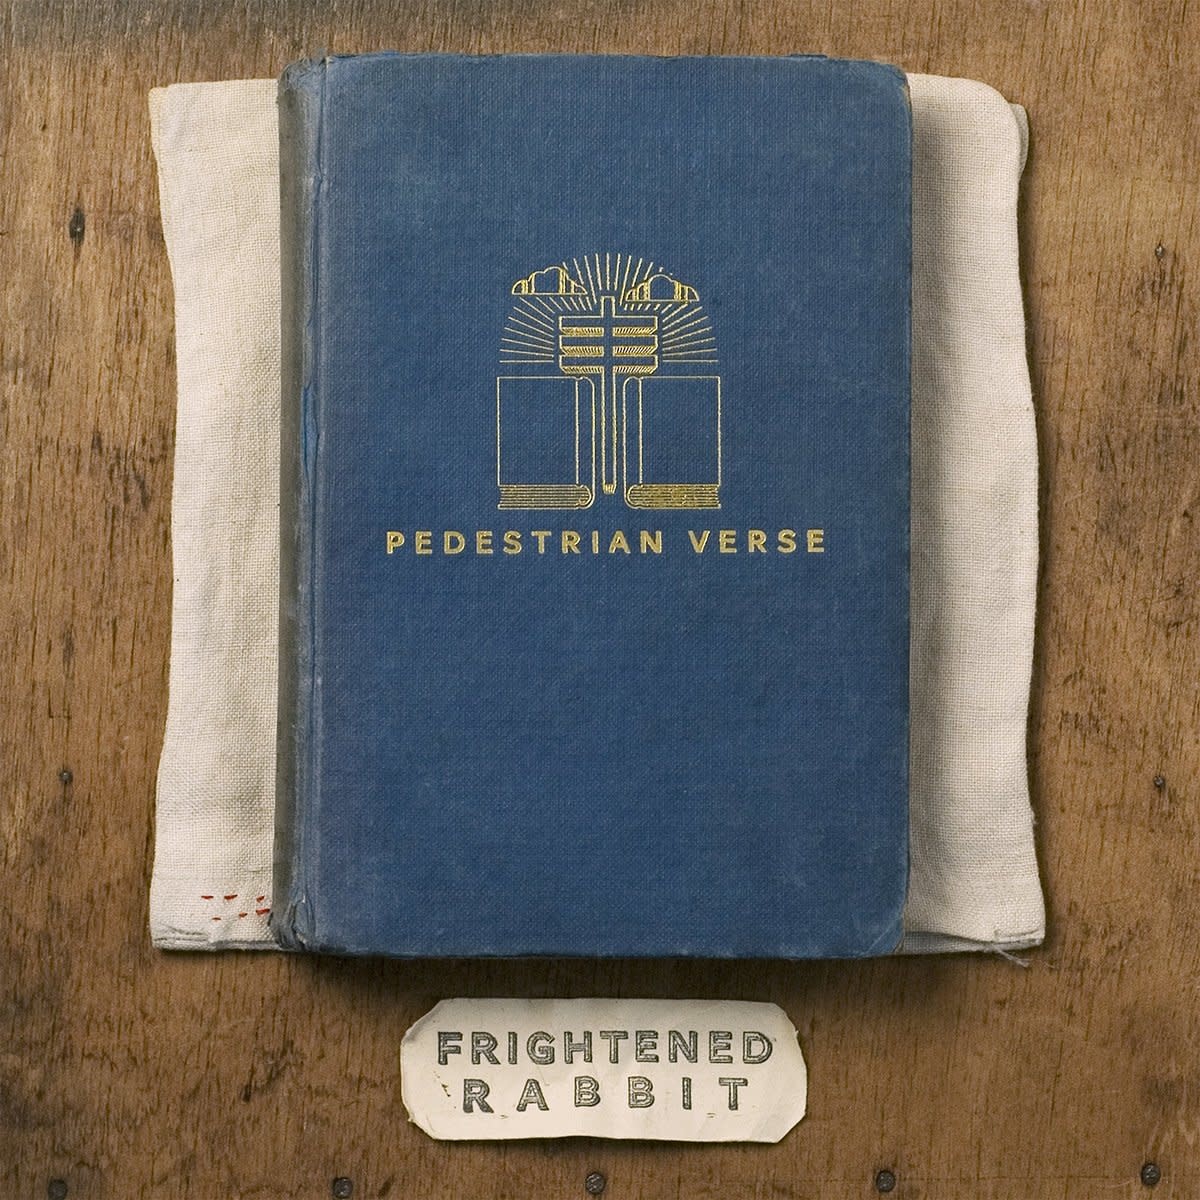 Frightened Rabbit – Pedestrian Verse (10th Anniversary Edition)